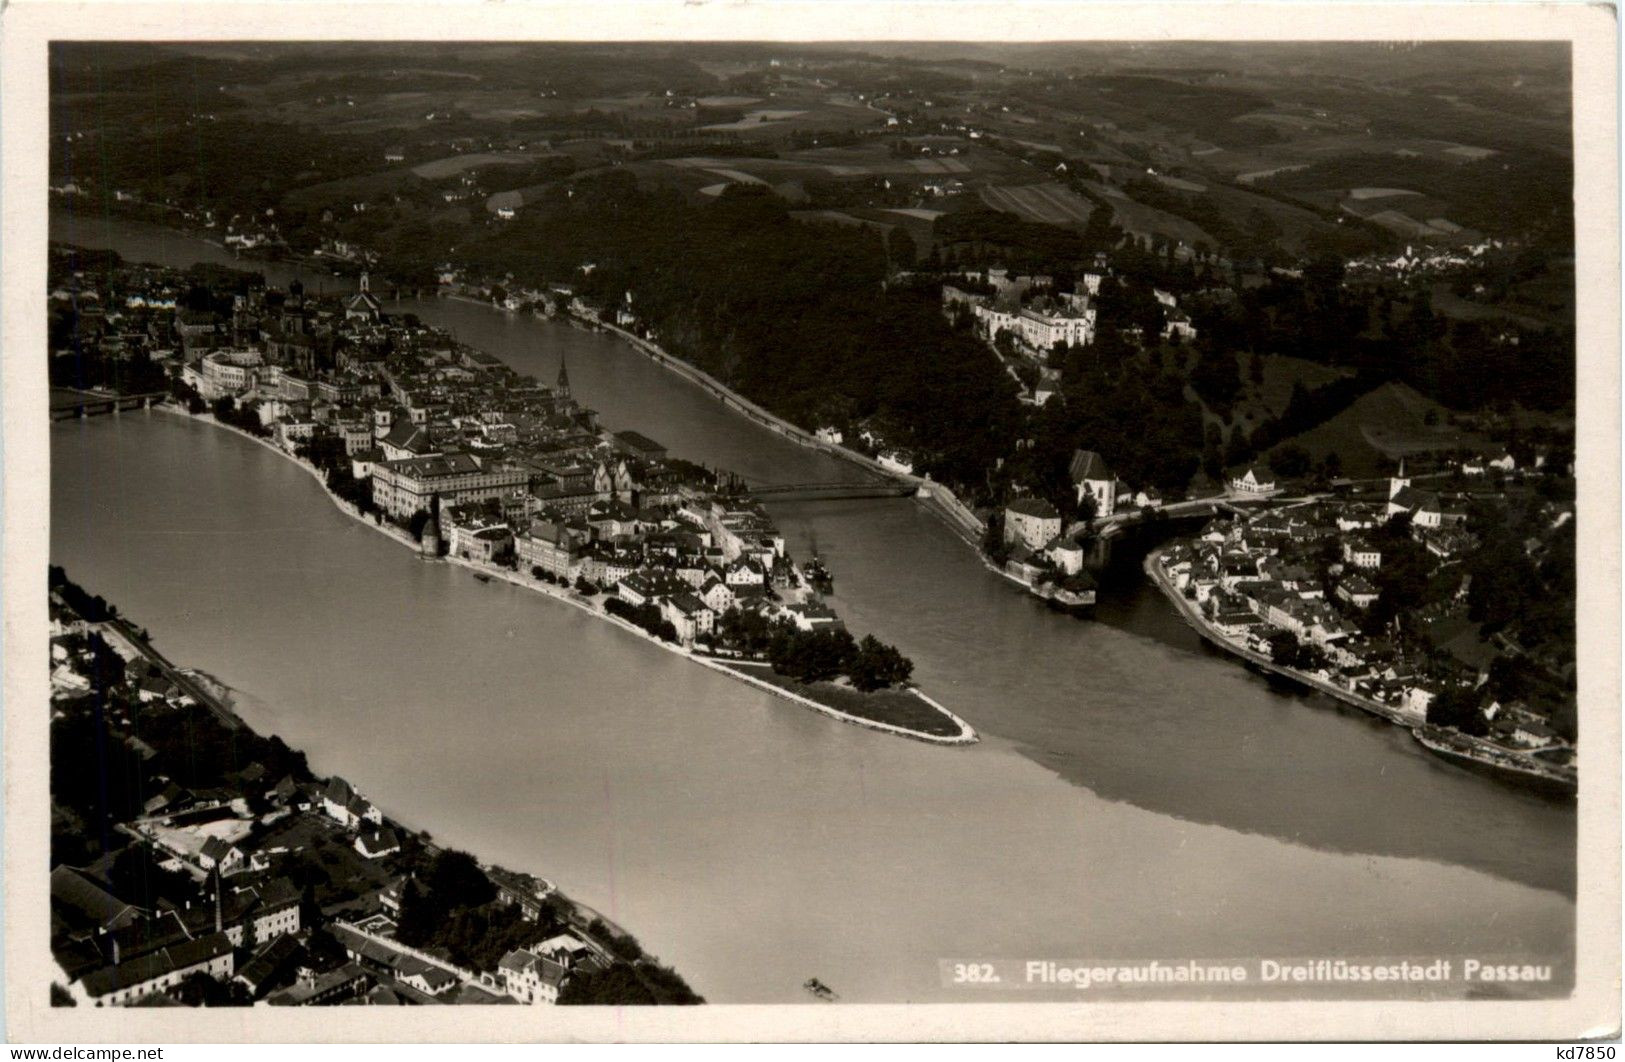 Passau/Bayern - Passau, Fliegeraufnahme Dreiflüssestadt - Passau